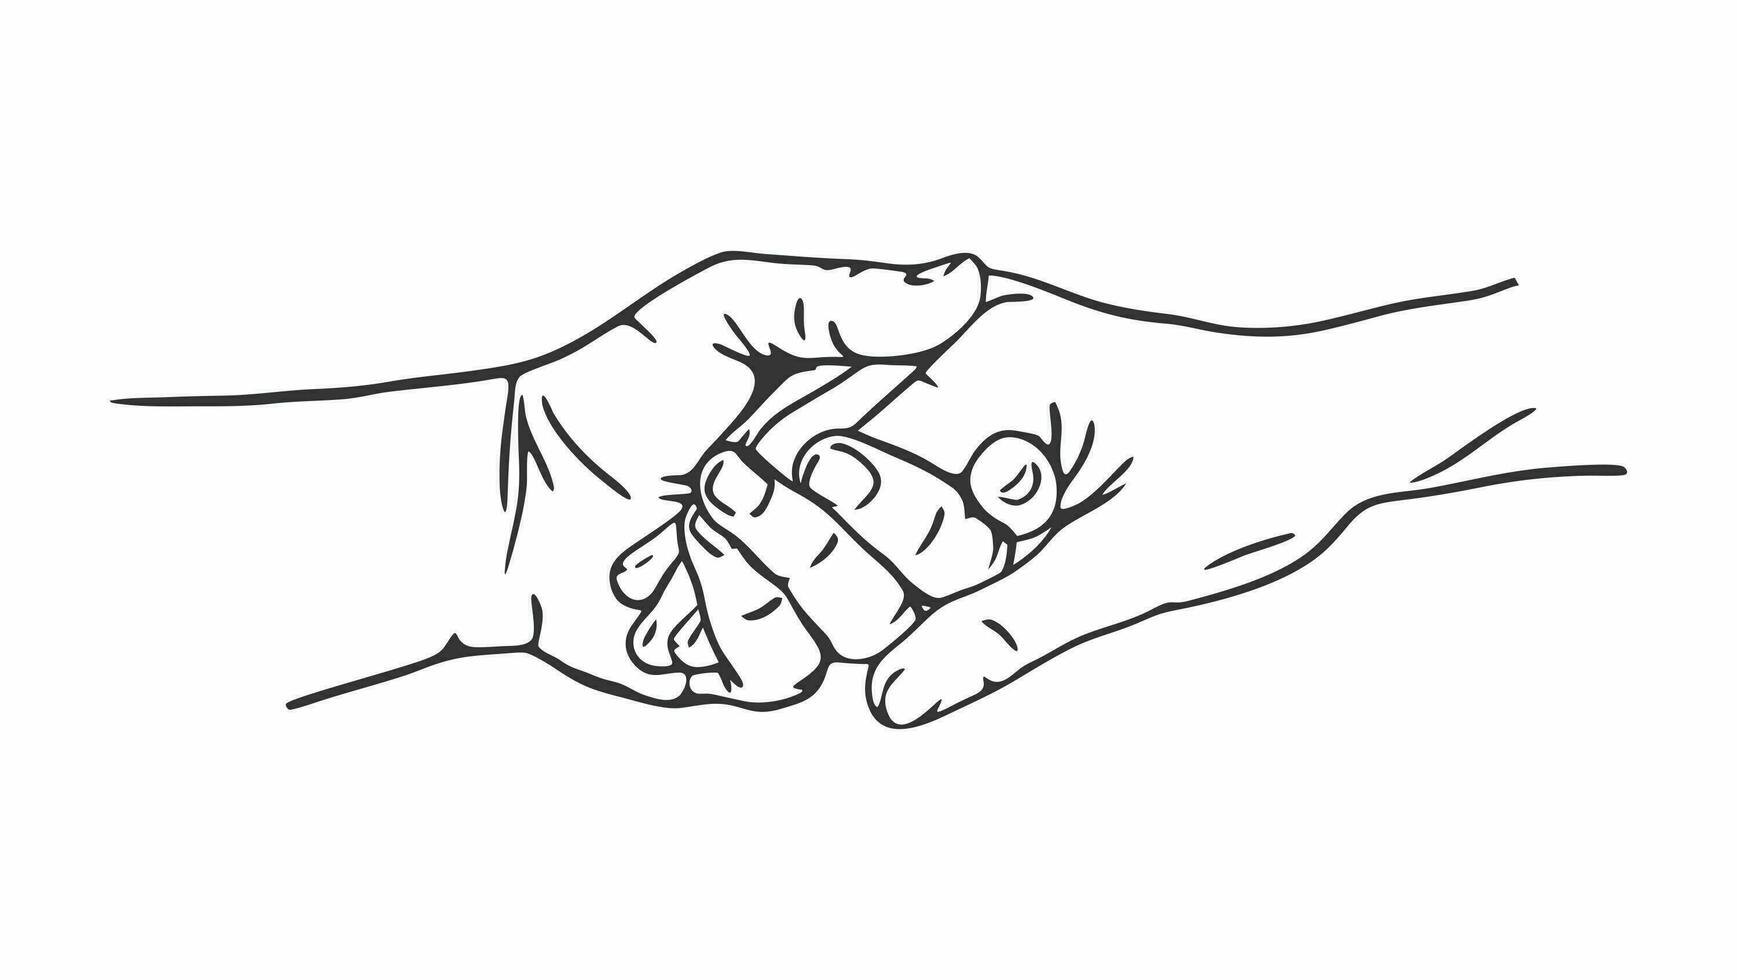 Elderly couple holding hands black and white illustration photo